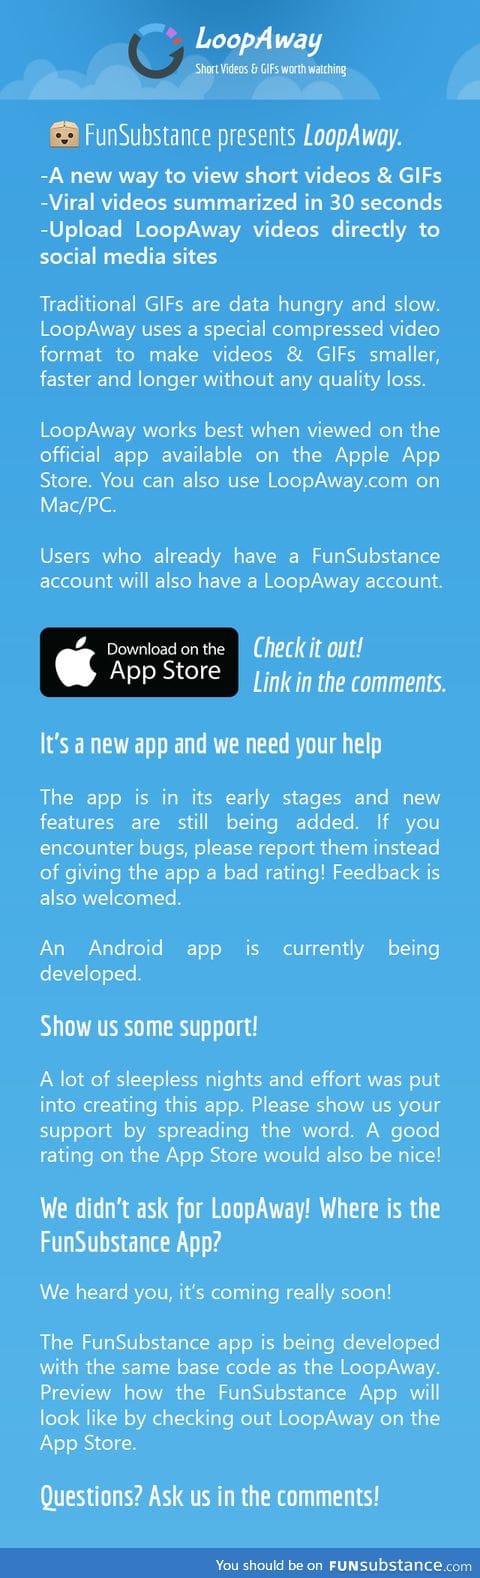 Meet LoopAway - By FunSubstance